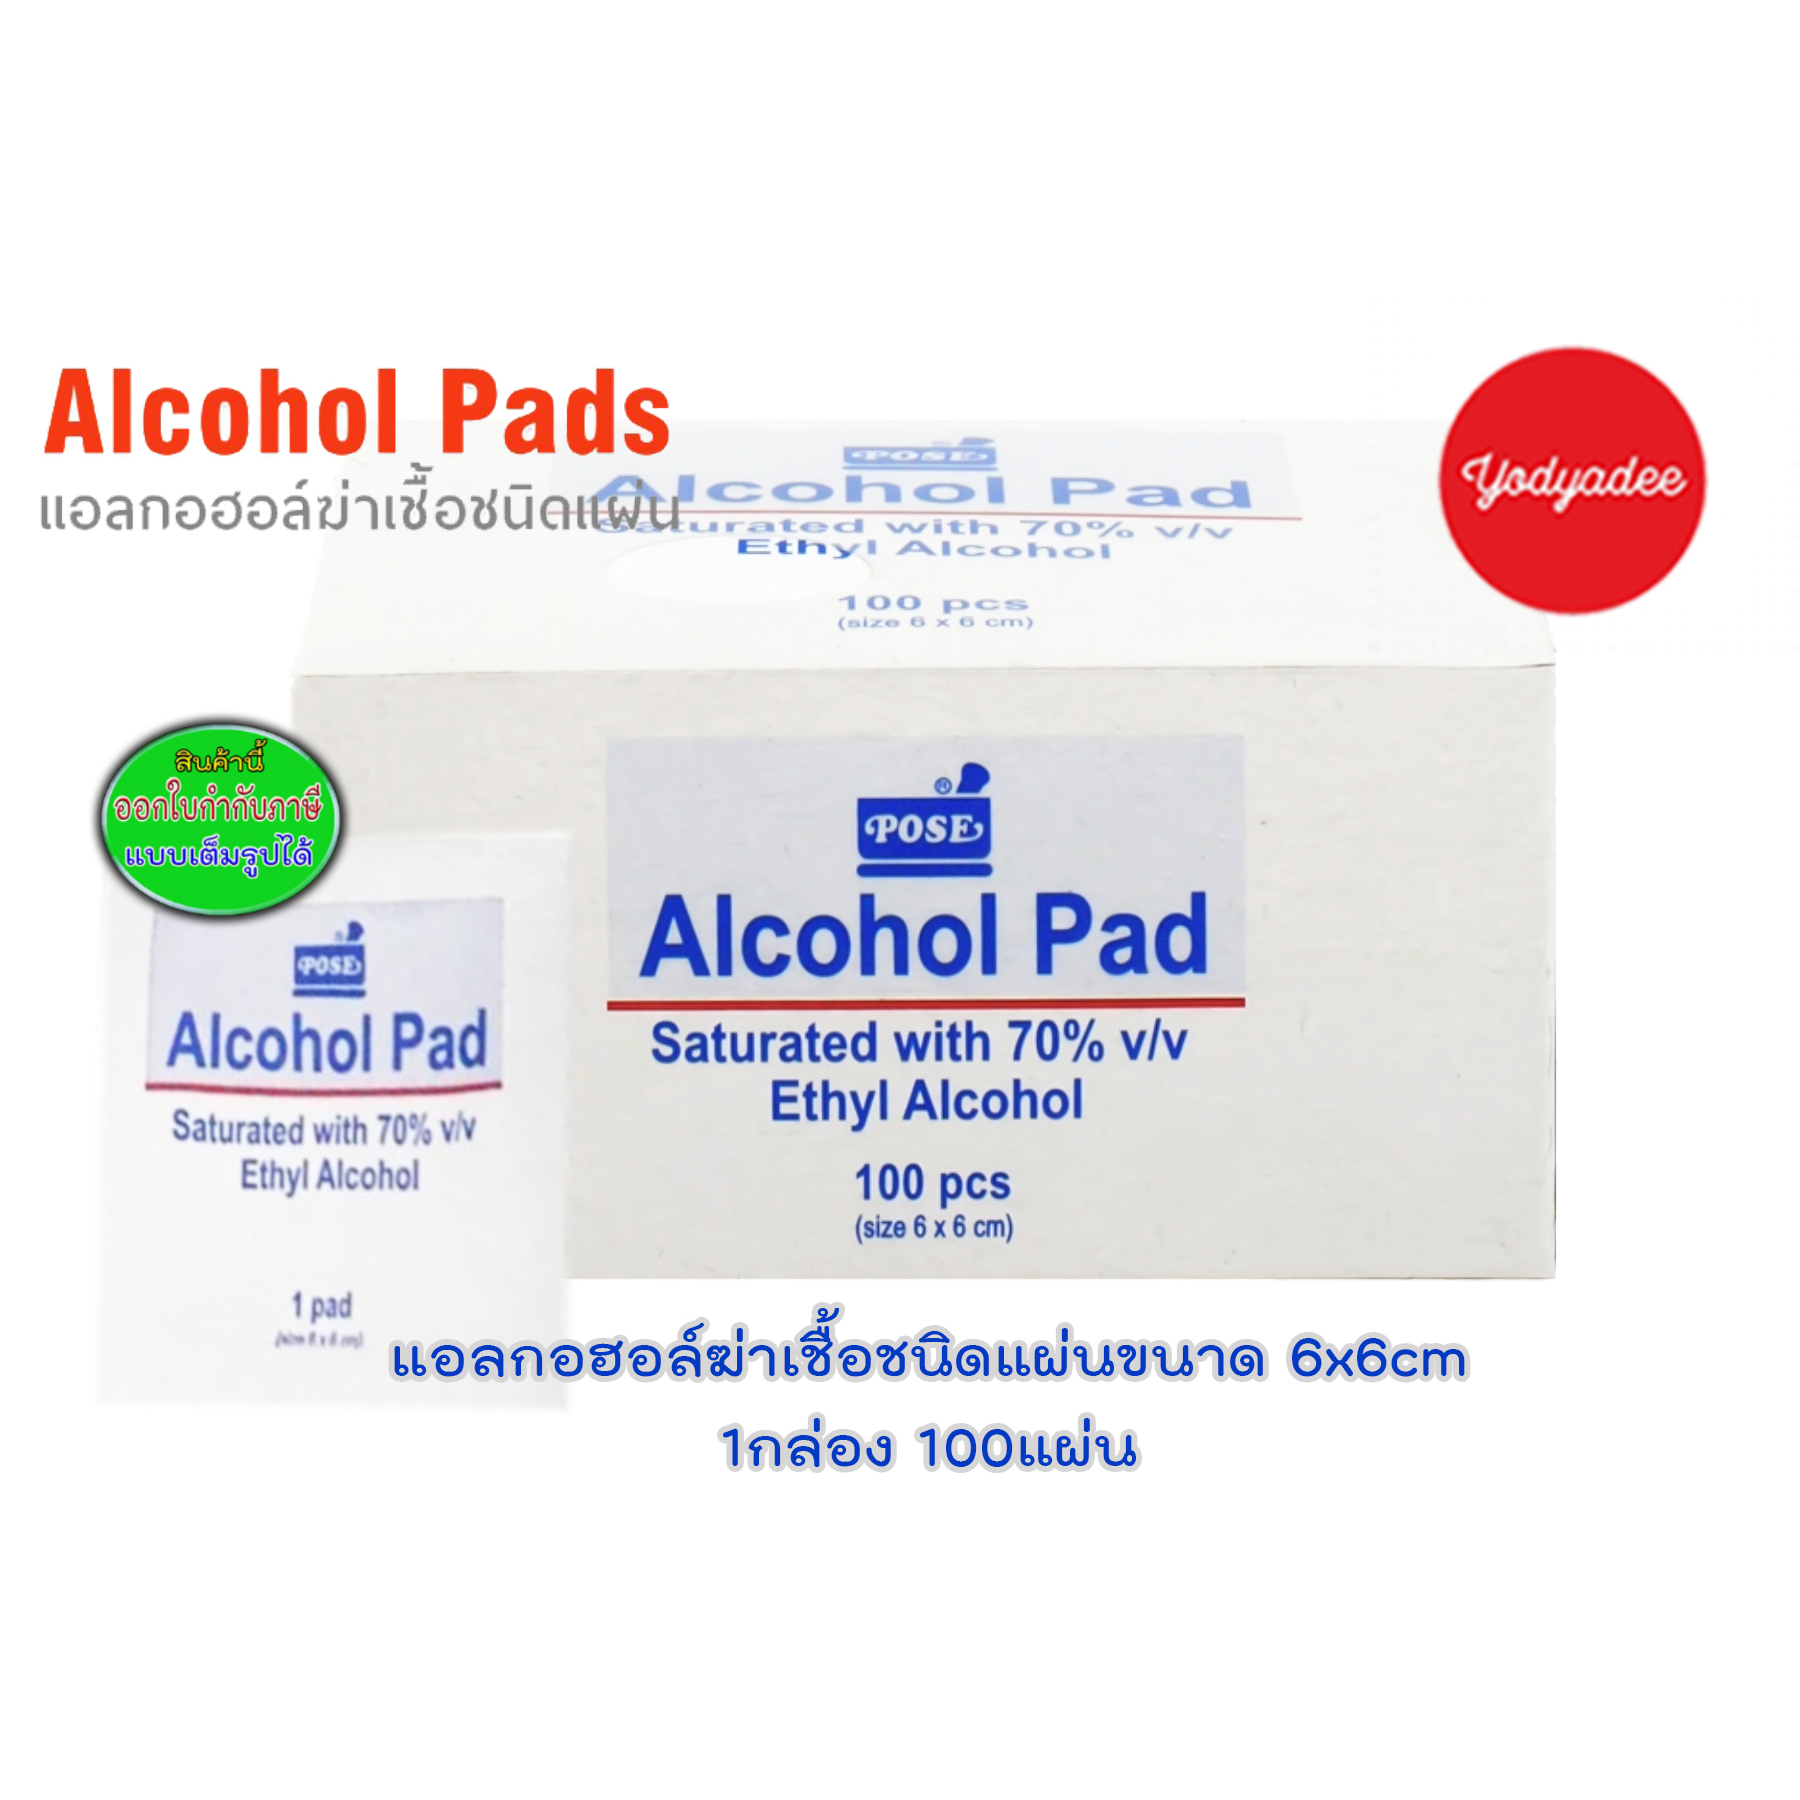 POSE Alcohol Pad Saturated with 70% Ethyl Alcohol (75924) แผ่นผ้าชุบเอทิลแอลกอฮอล์อิ่มตัว 70% 1กล่อง100แผ่น ขนาด6x6cm